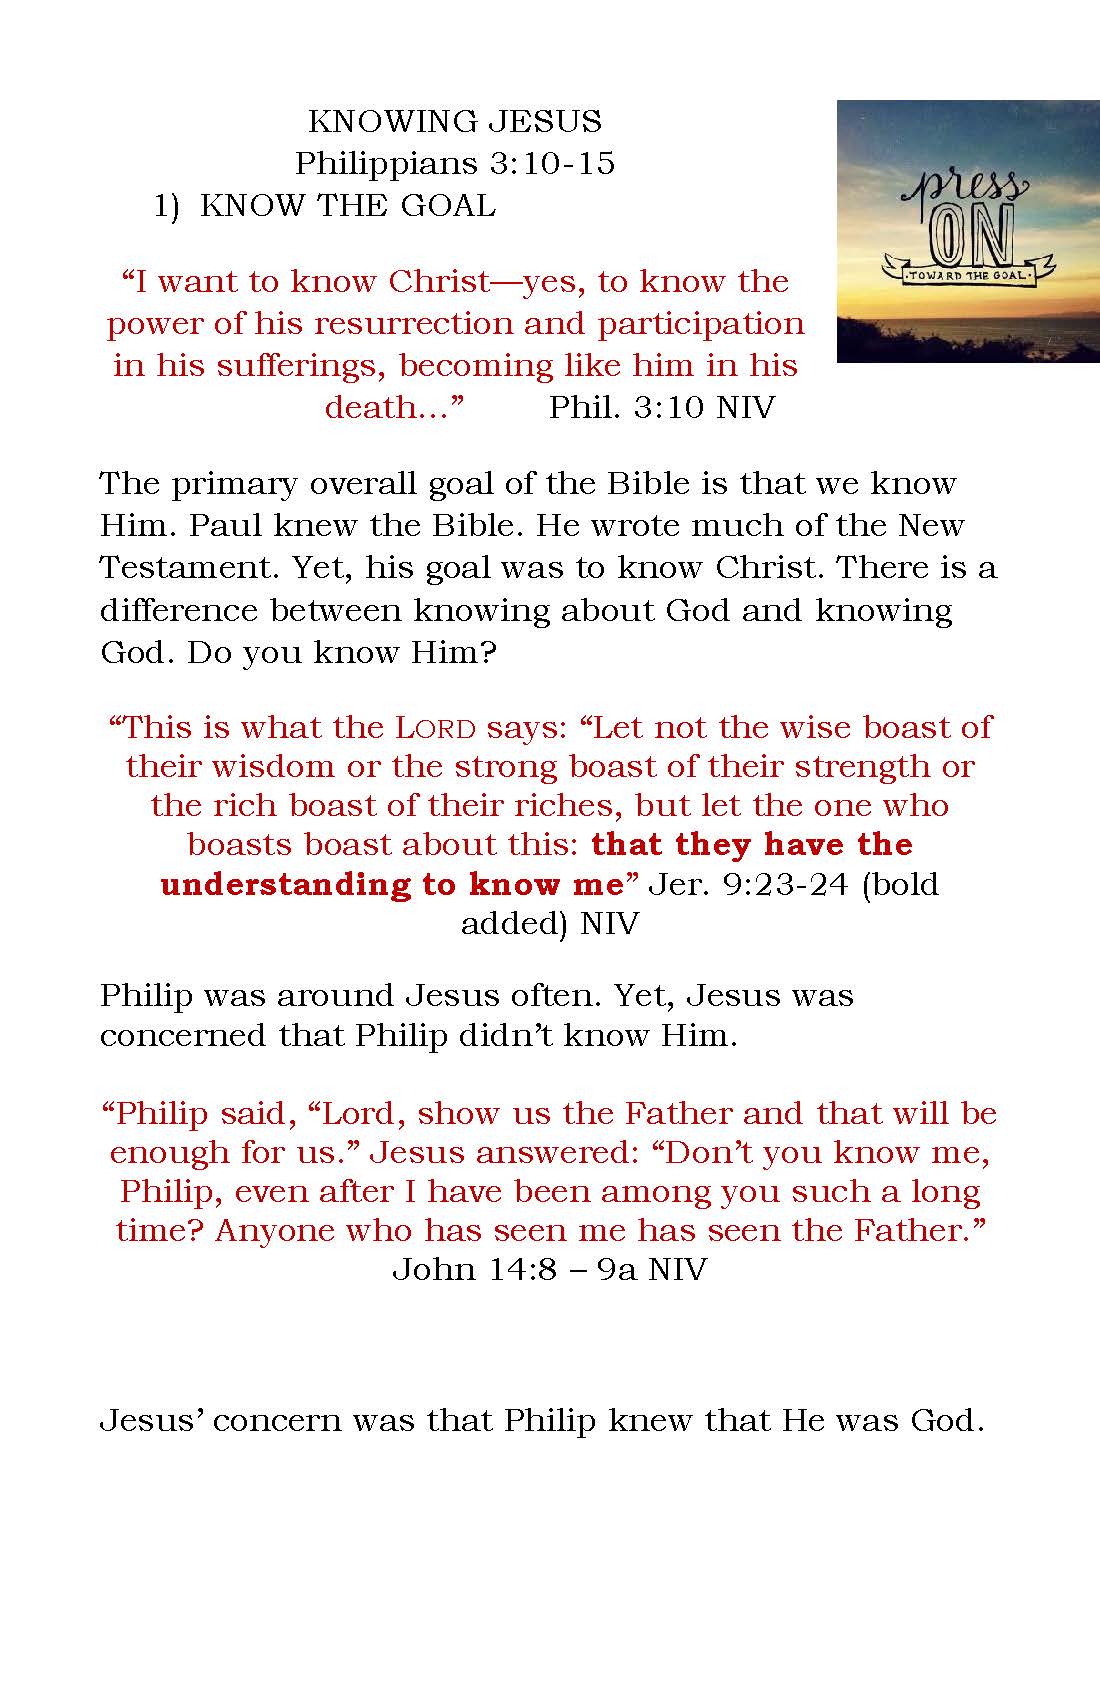 KNOWING JESUS INSERT_Page_1